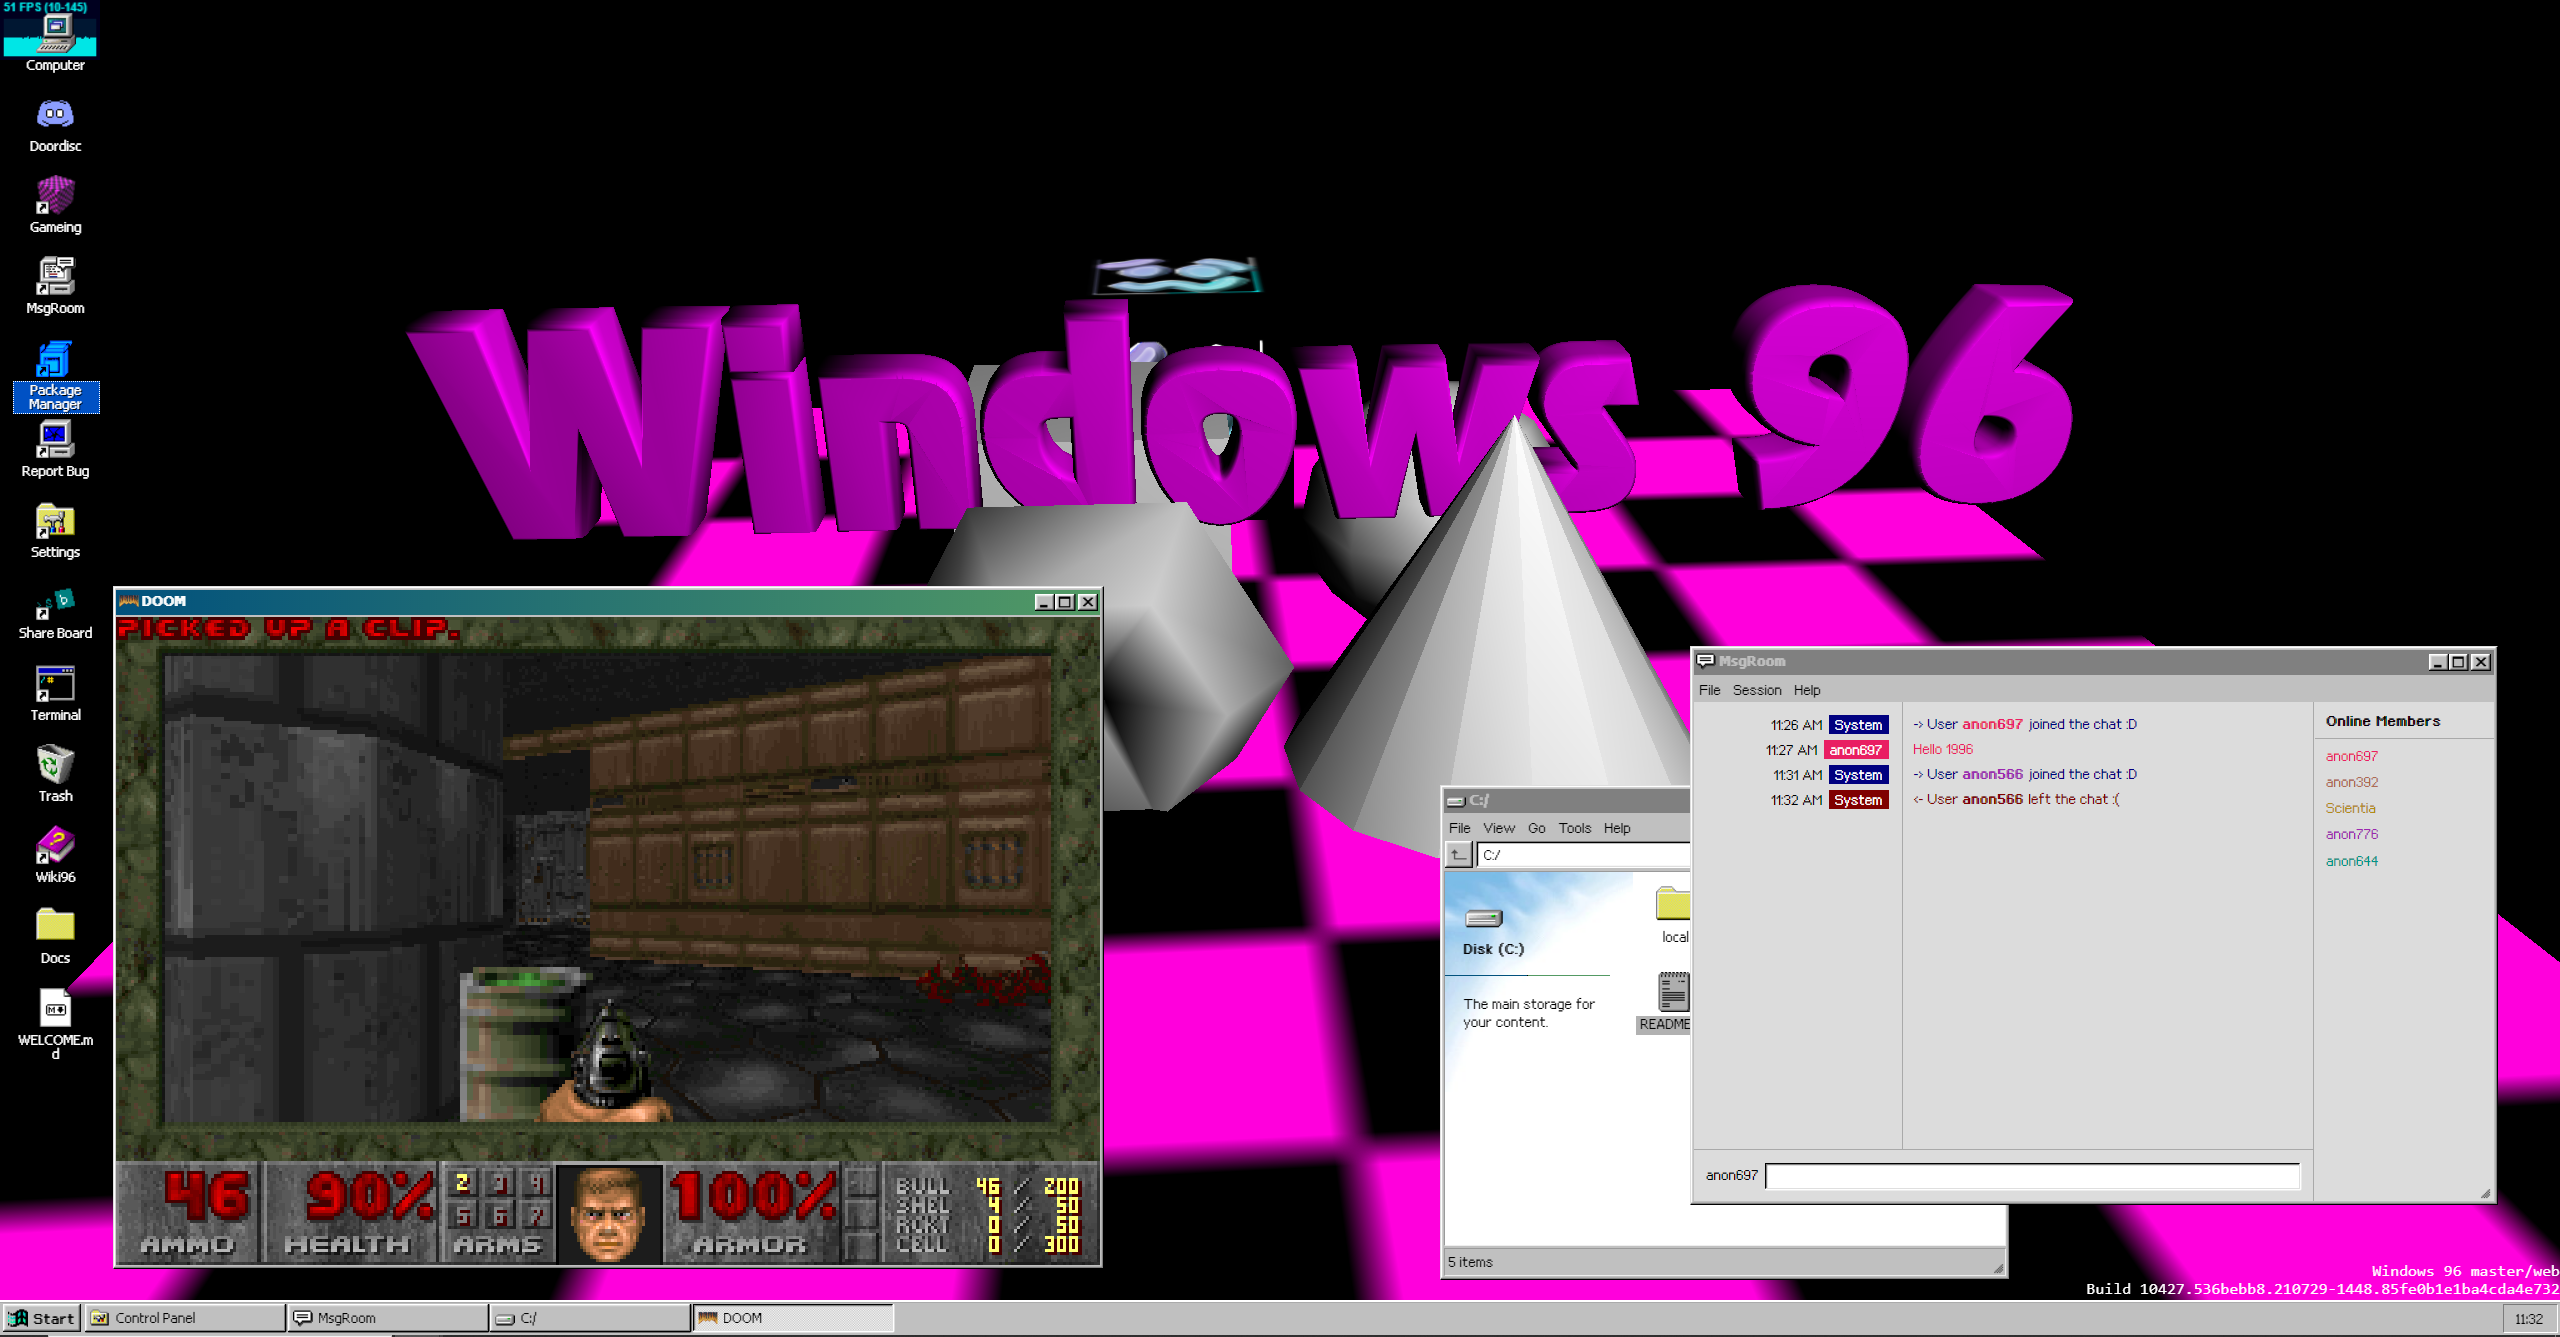 Windows 96 runs Doom